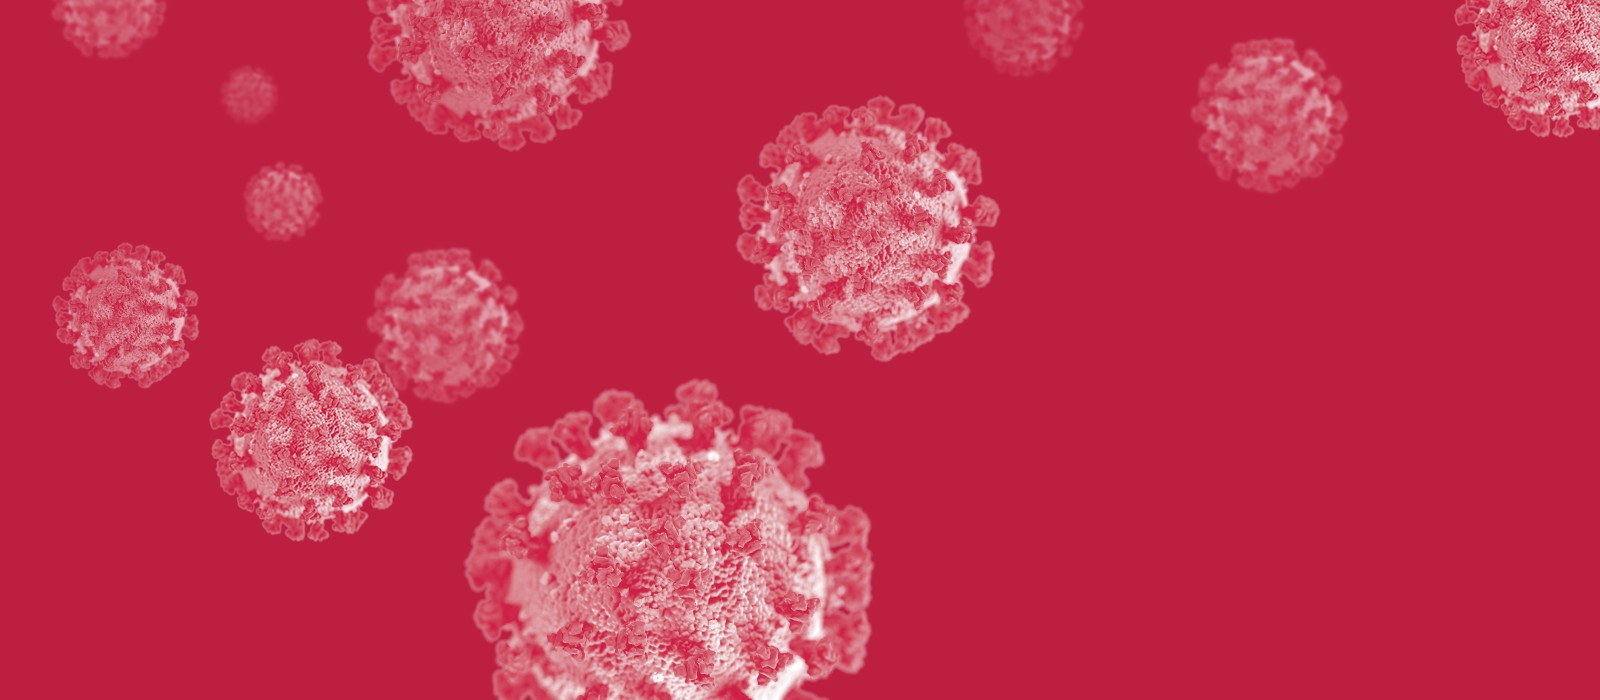 graphical illustration of the coronavirus